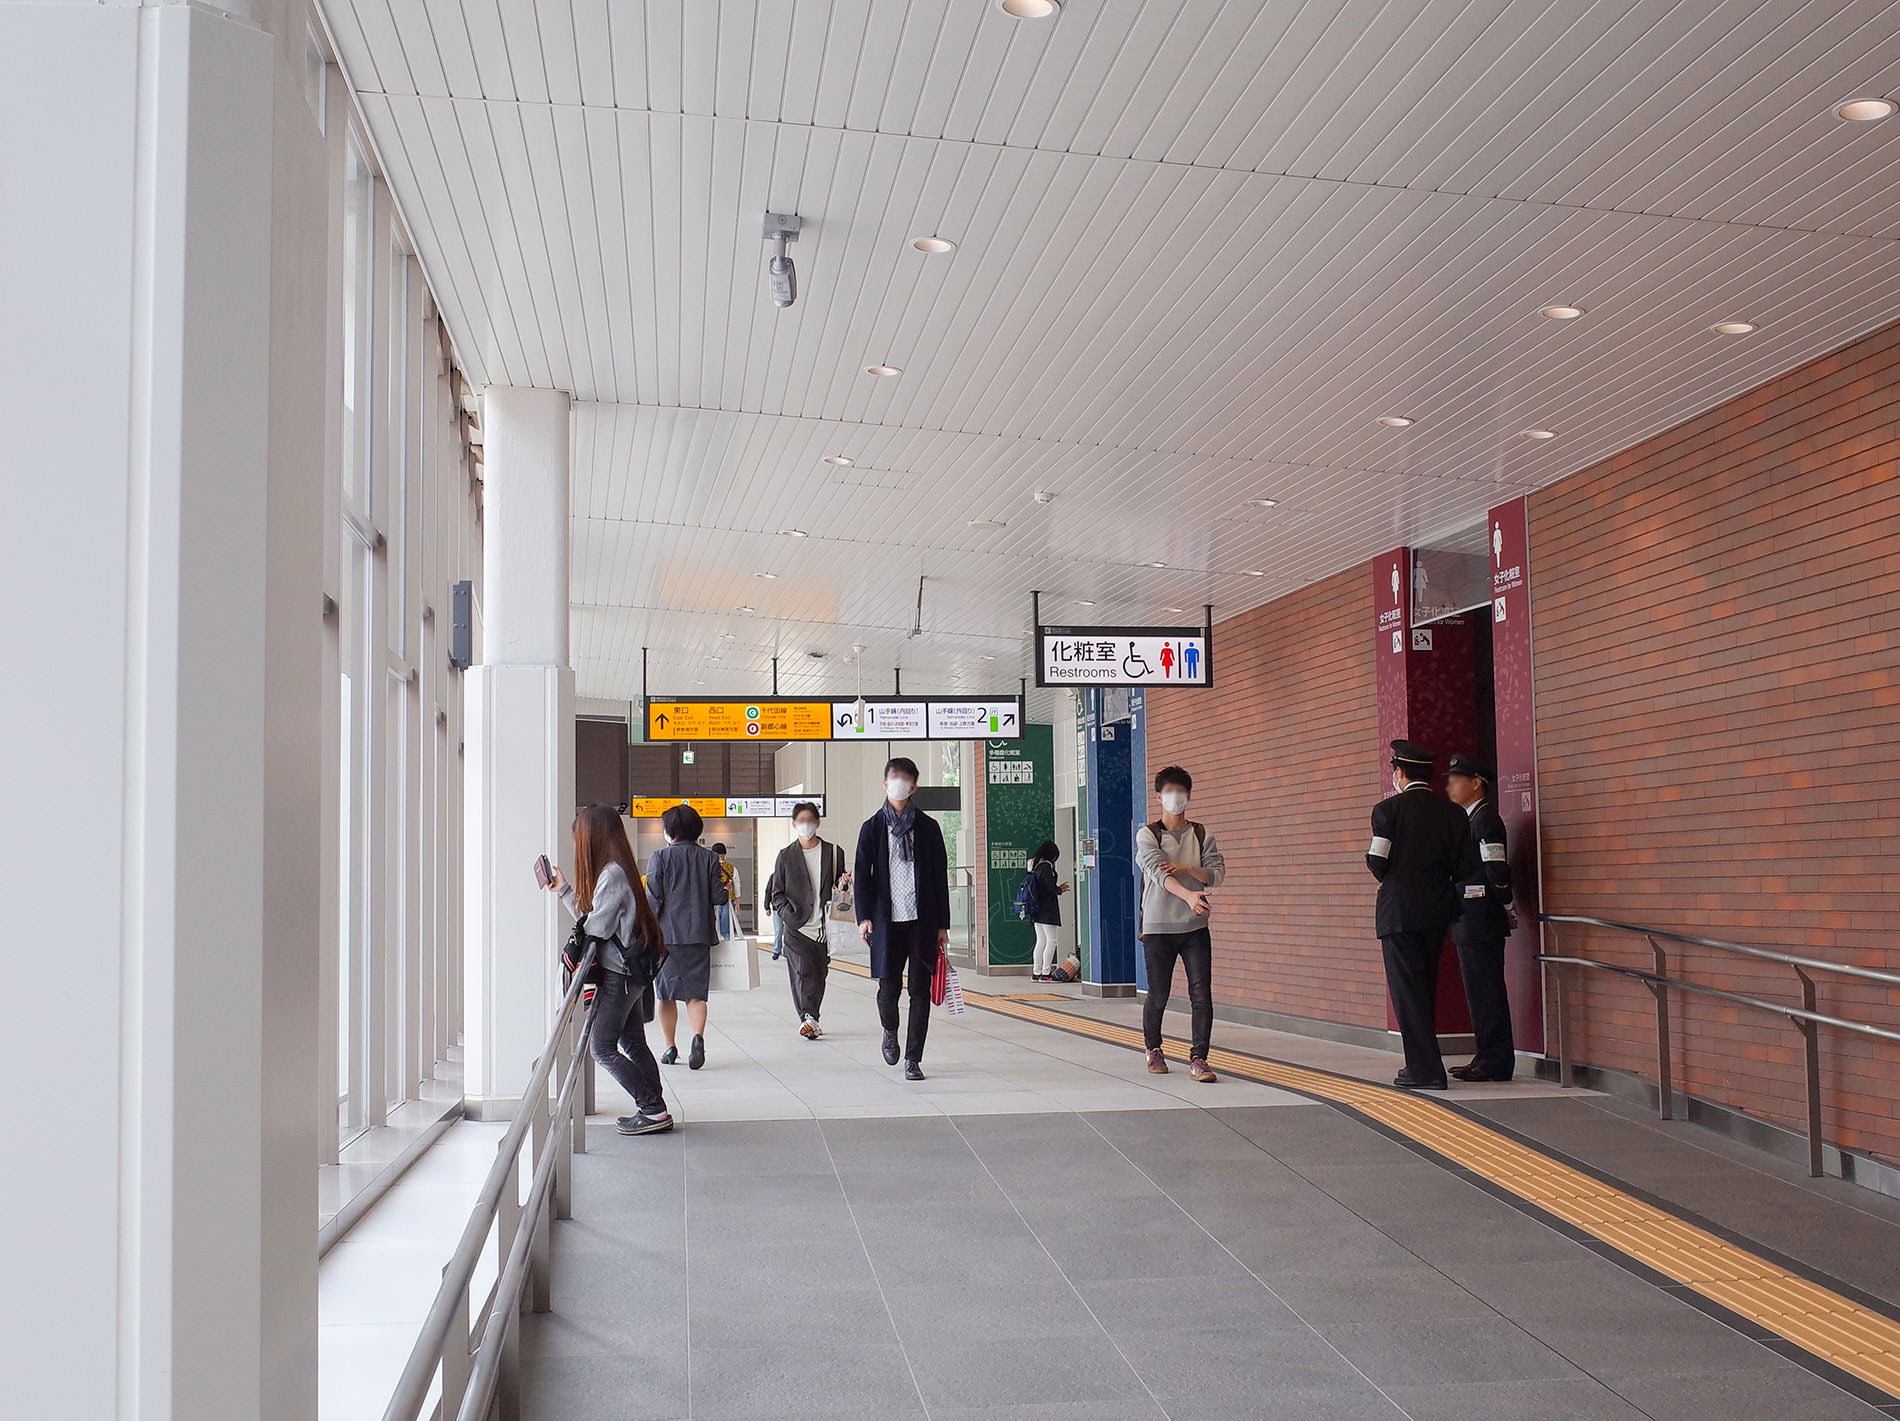 JR原宿駅 新駅舎 / jr_harajyuku_station_new_station_building